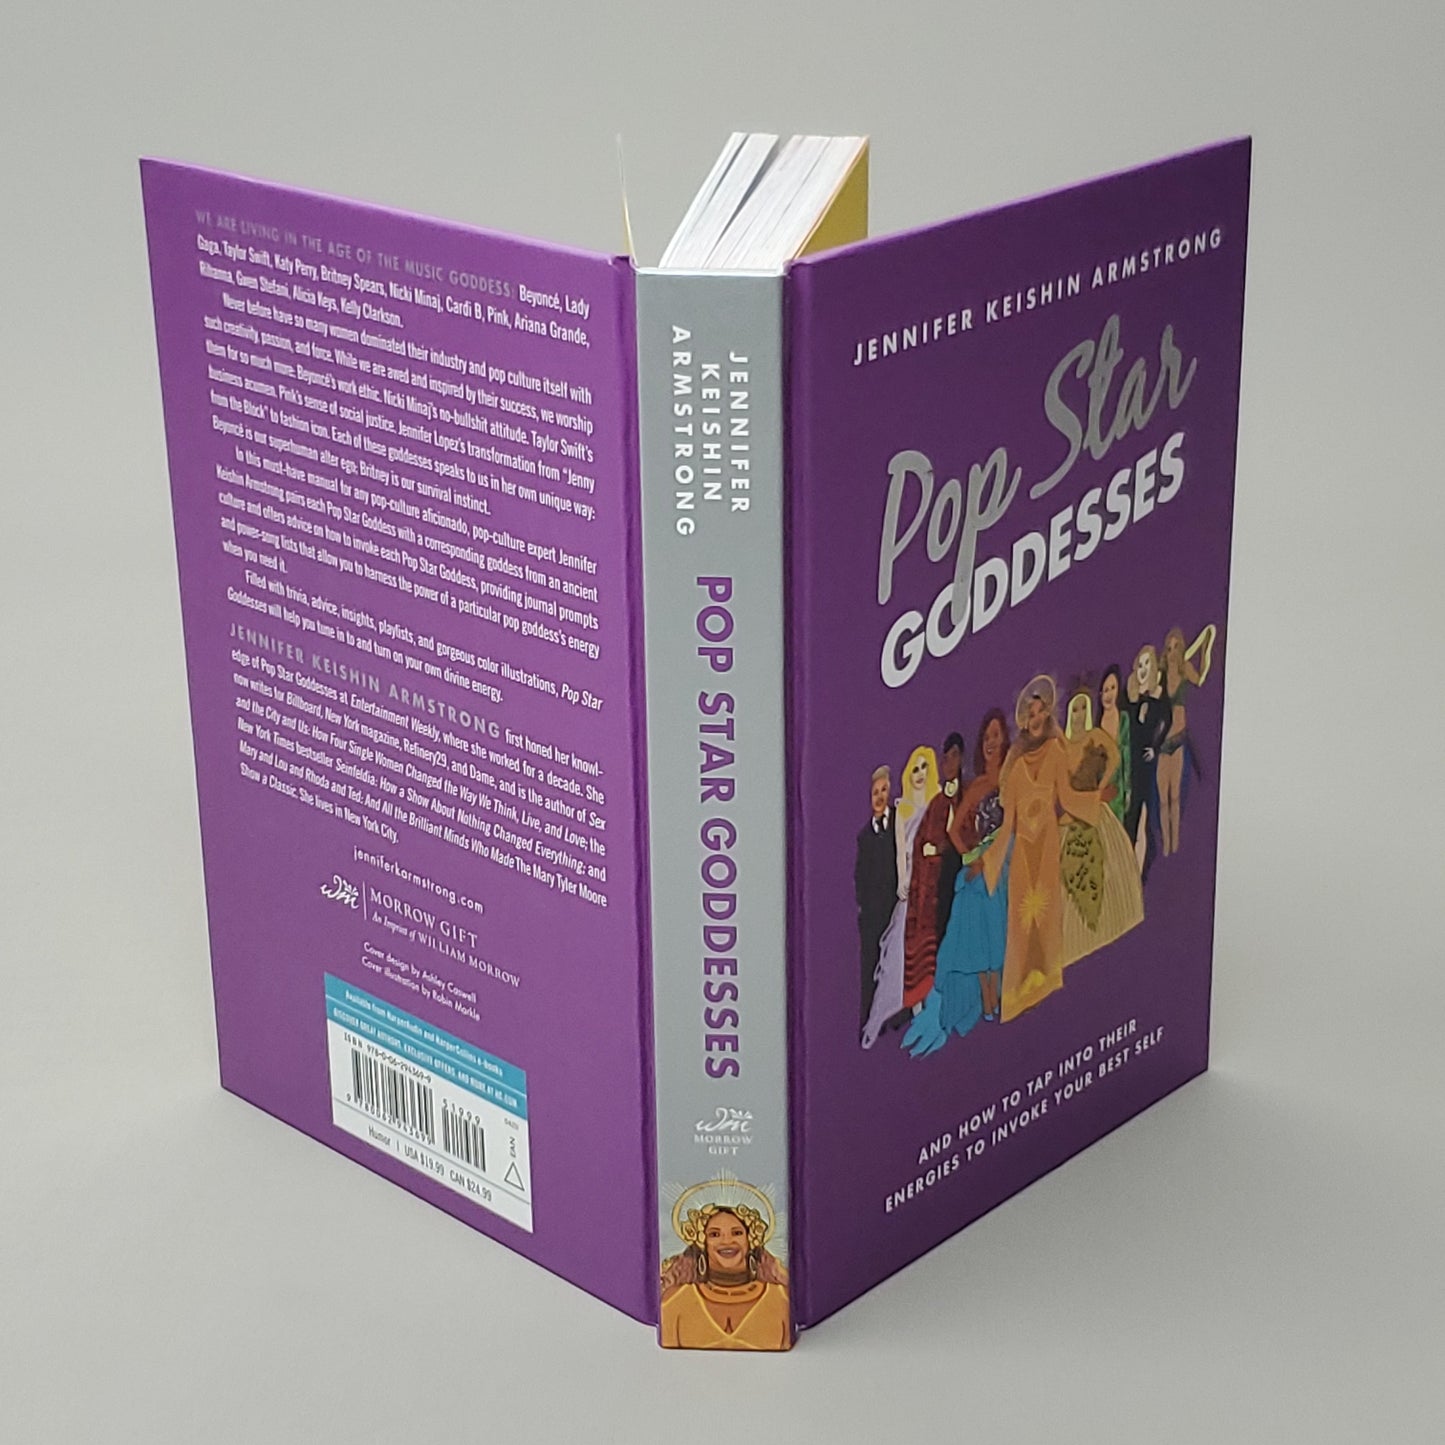 POP STAR GODDESSES by Jennifer Keishin Armstrong Book Hardback (New)